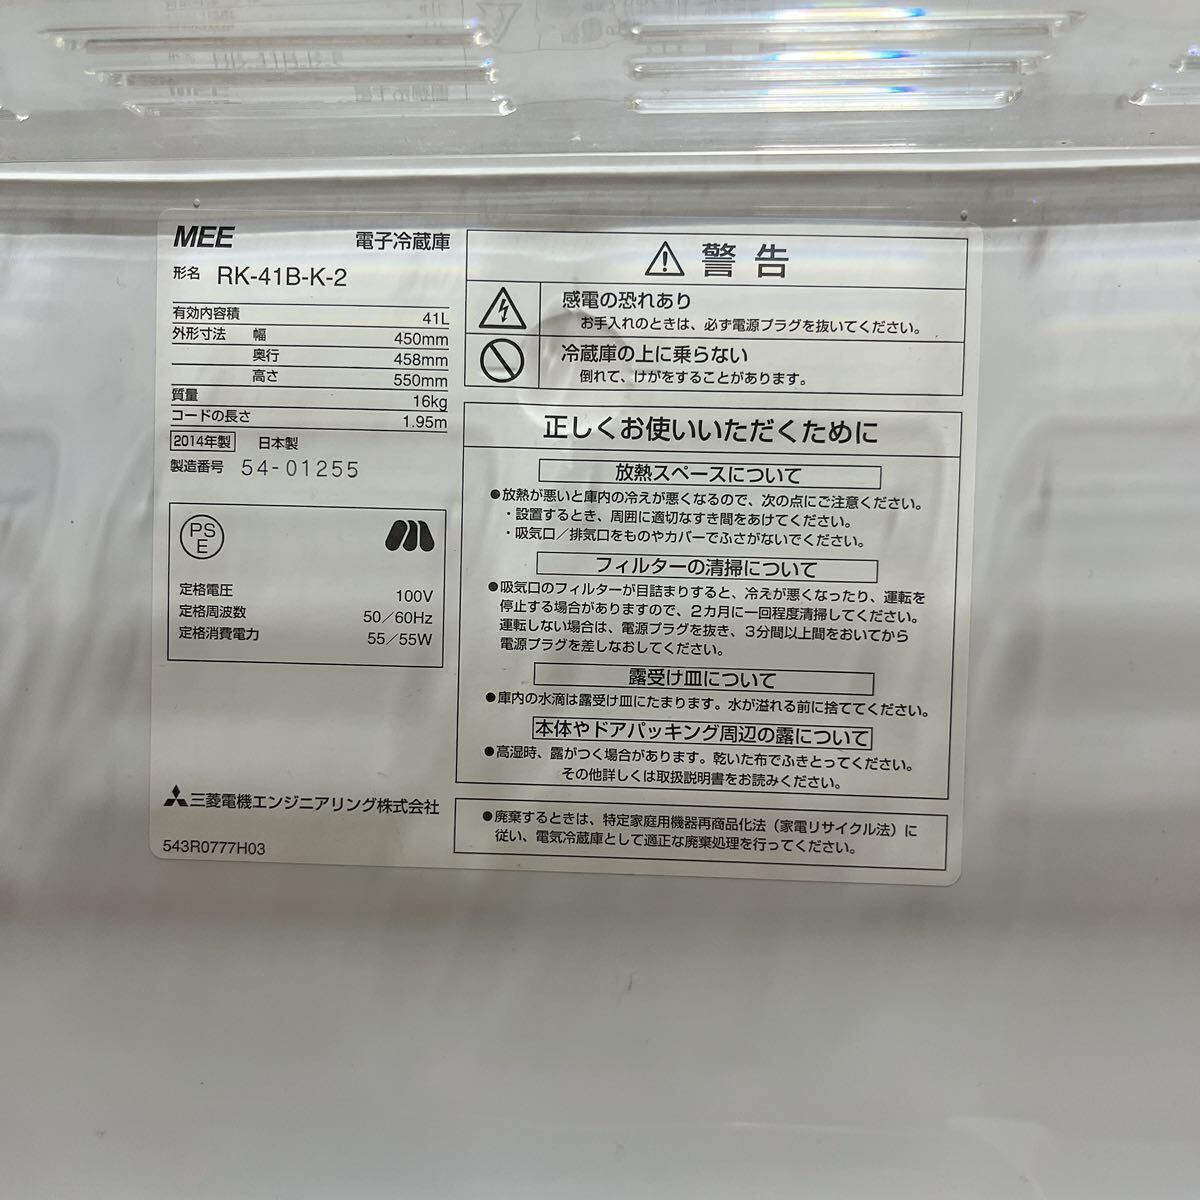  gran *peru che RK-41B-K-2 refrigerator junk retro part removing repair goods 